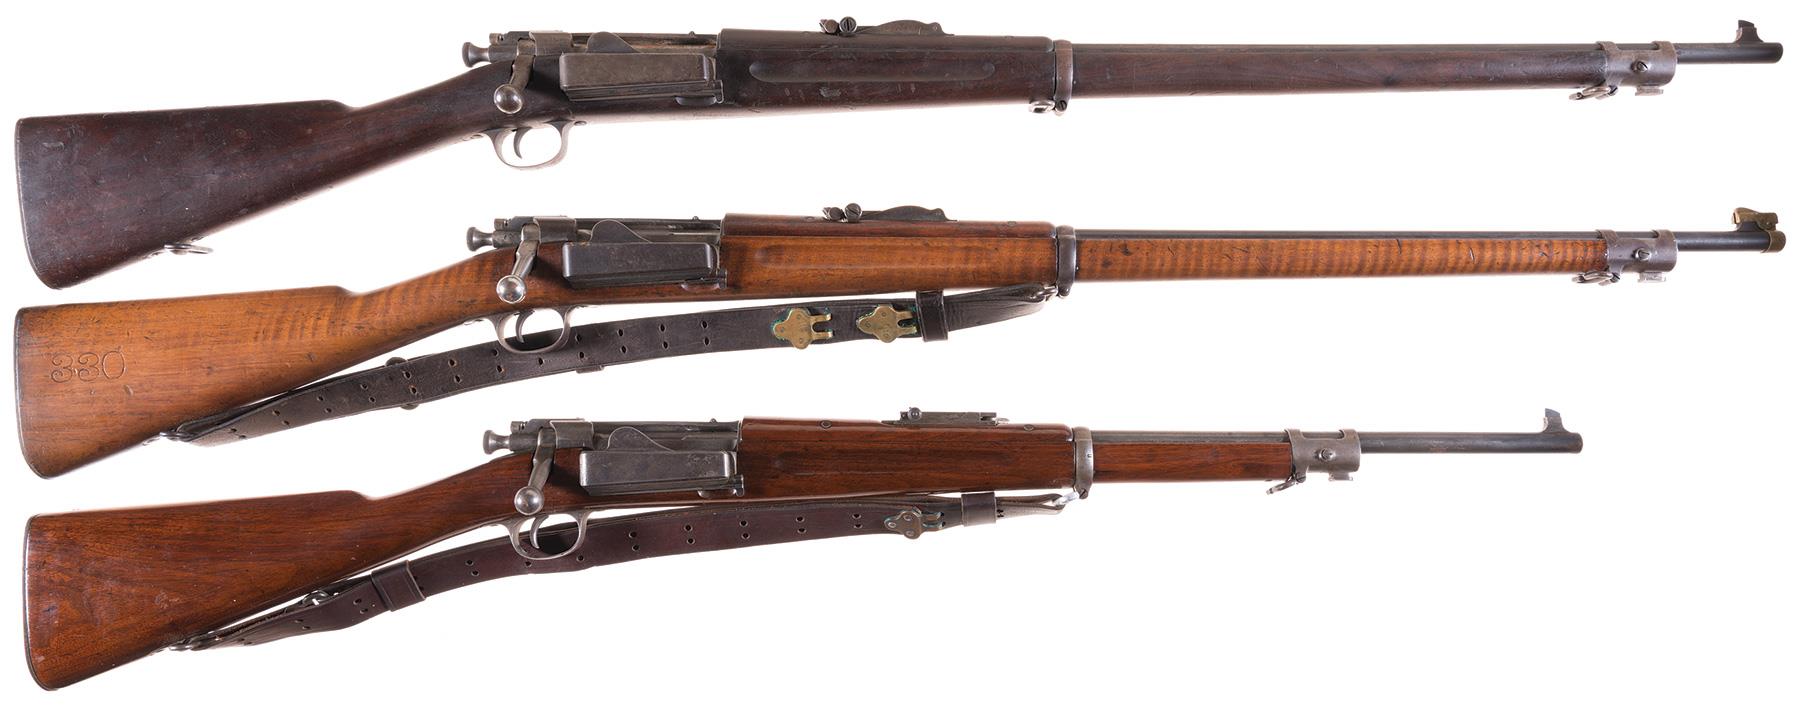 Krag-Jorgensen Bolt Action Rifles -A) U.S. Springfield Model 1898 Krag Rifl...